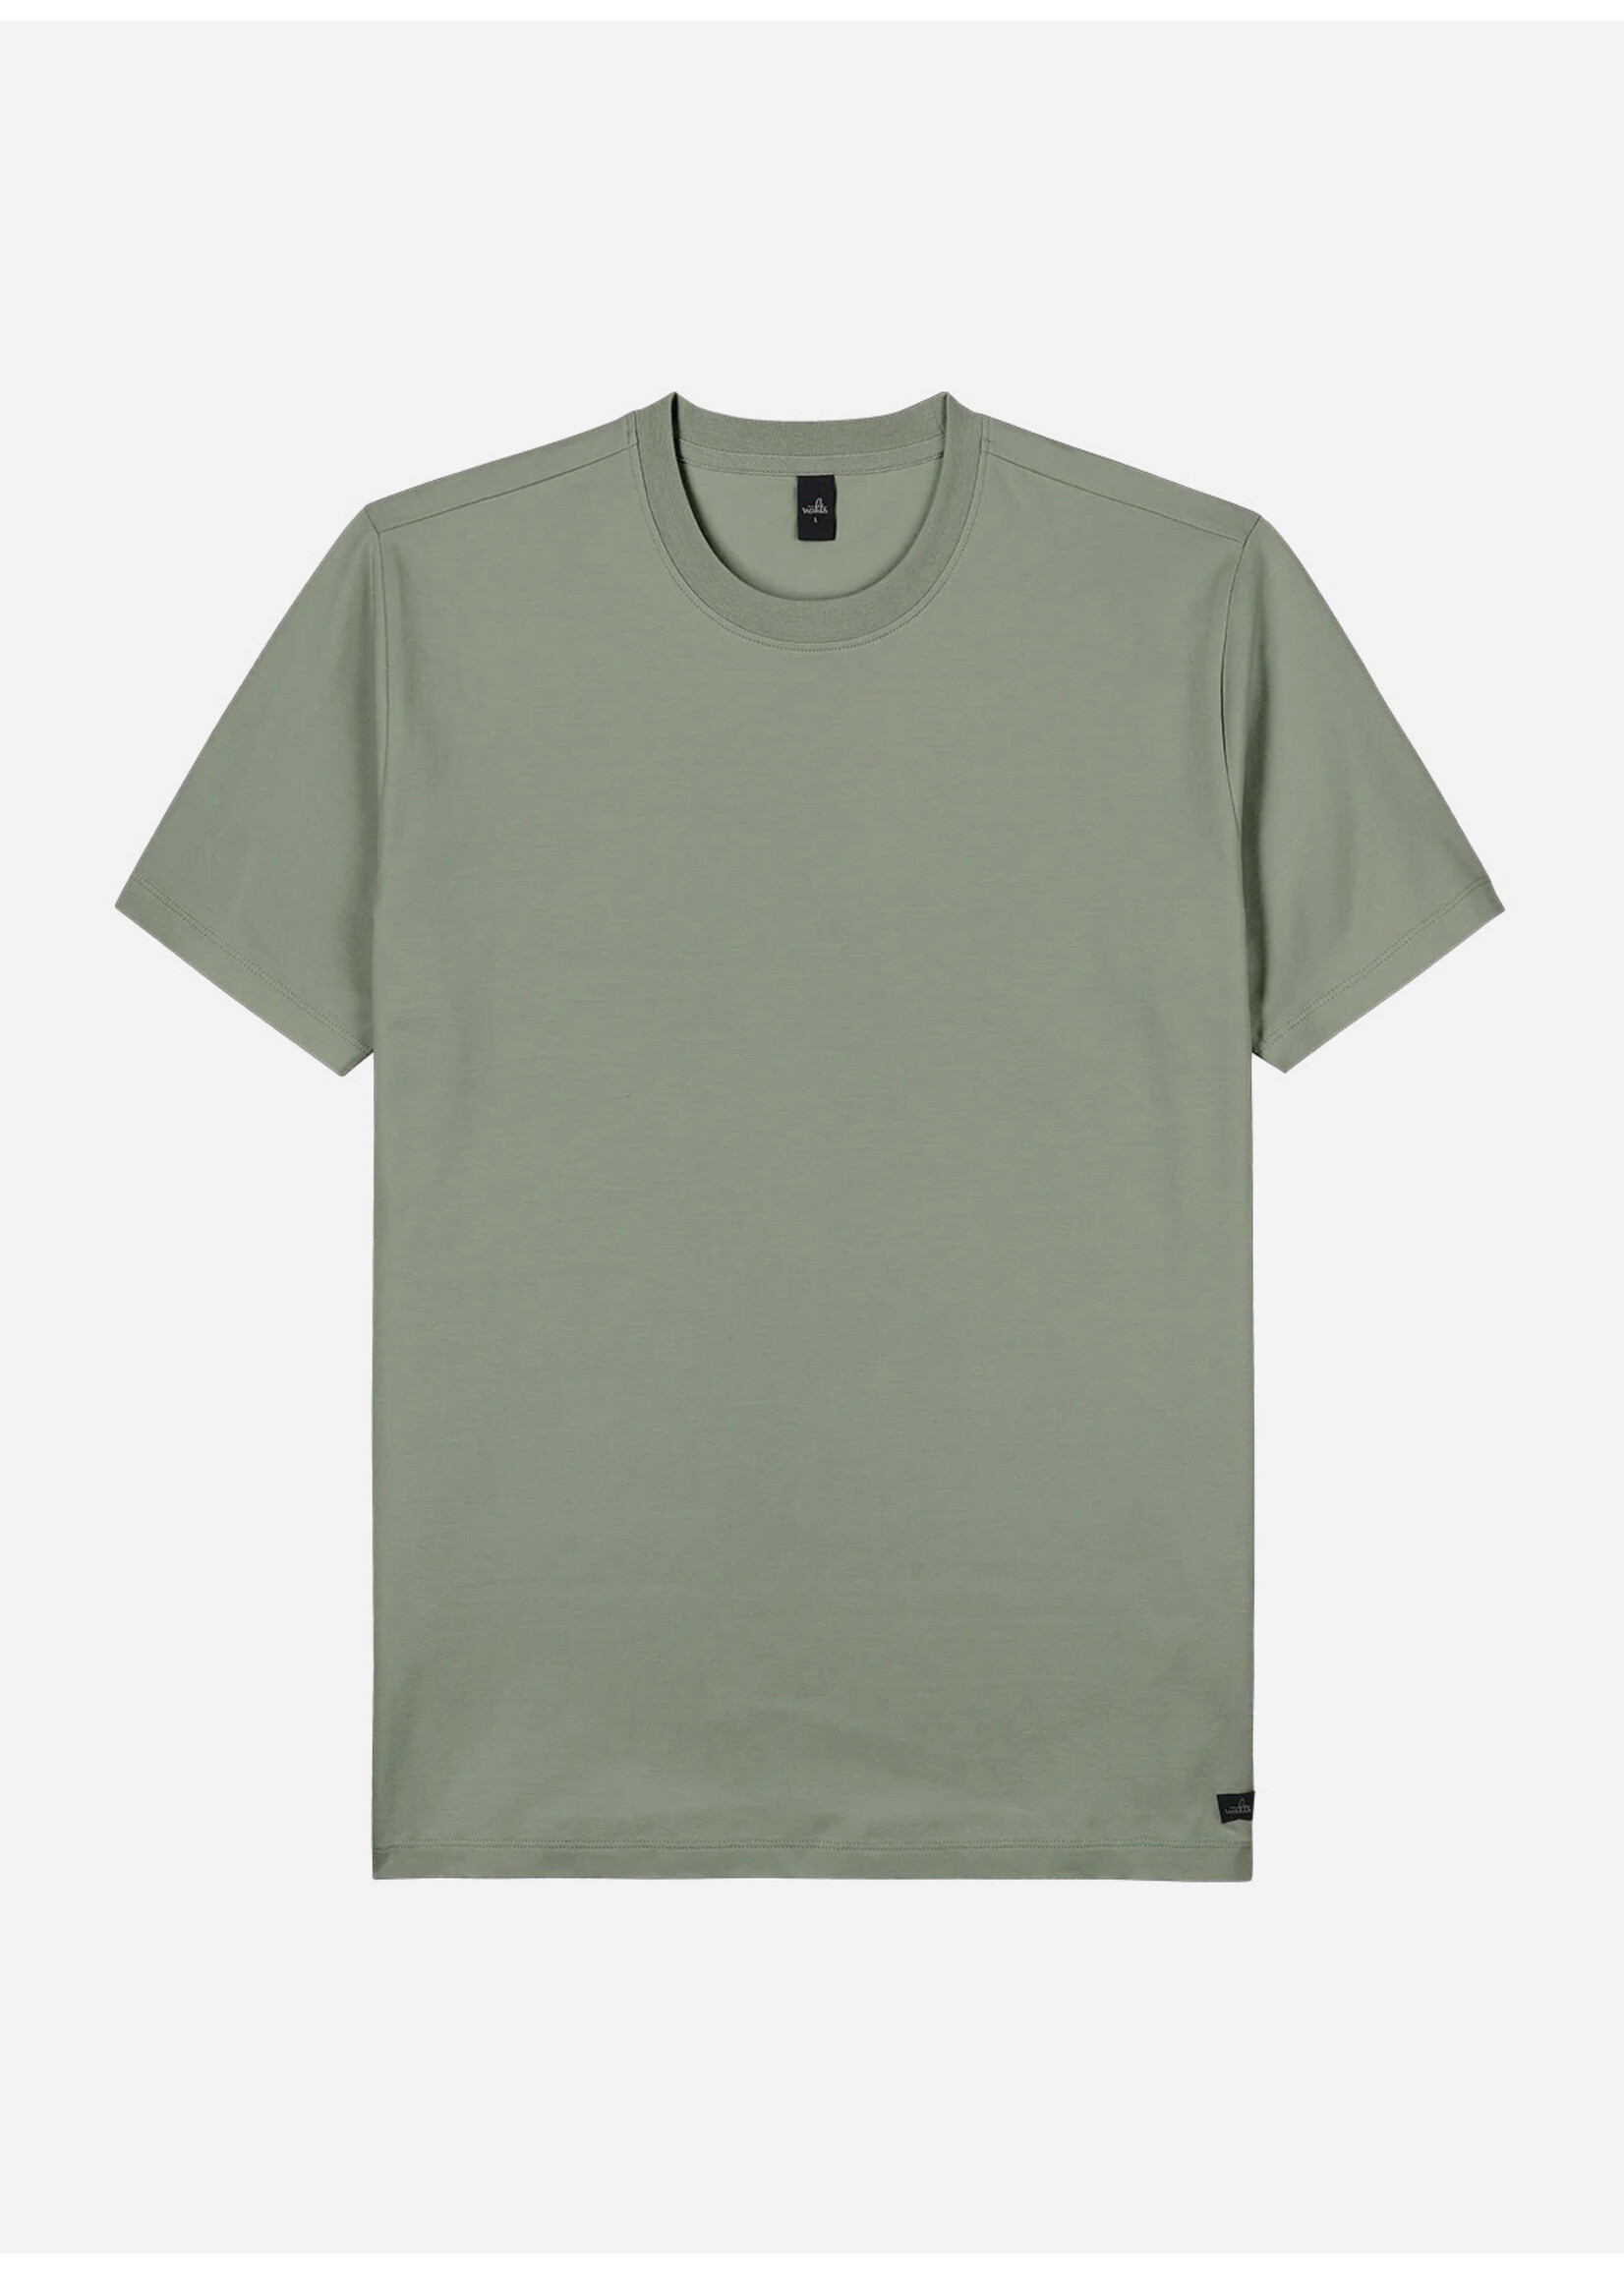 Wahts Berkley T-Shirt Sage Green